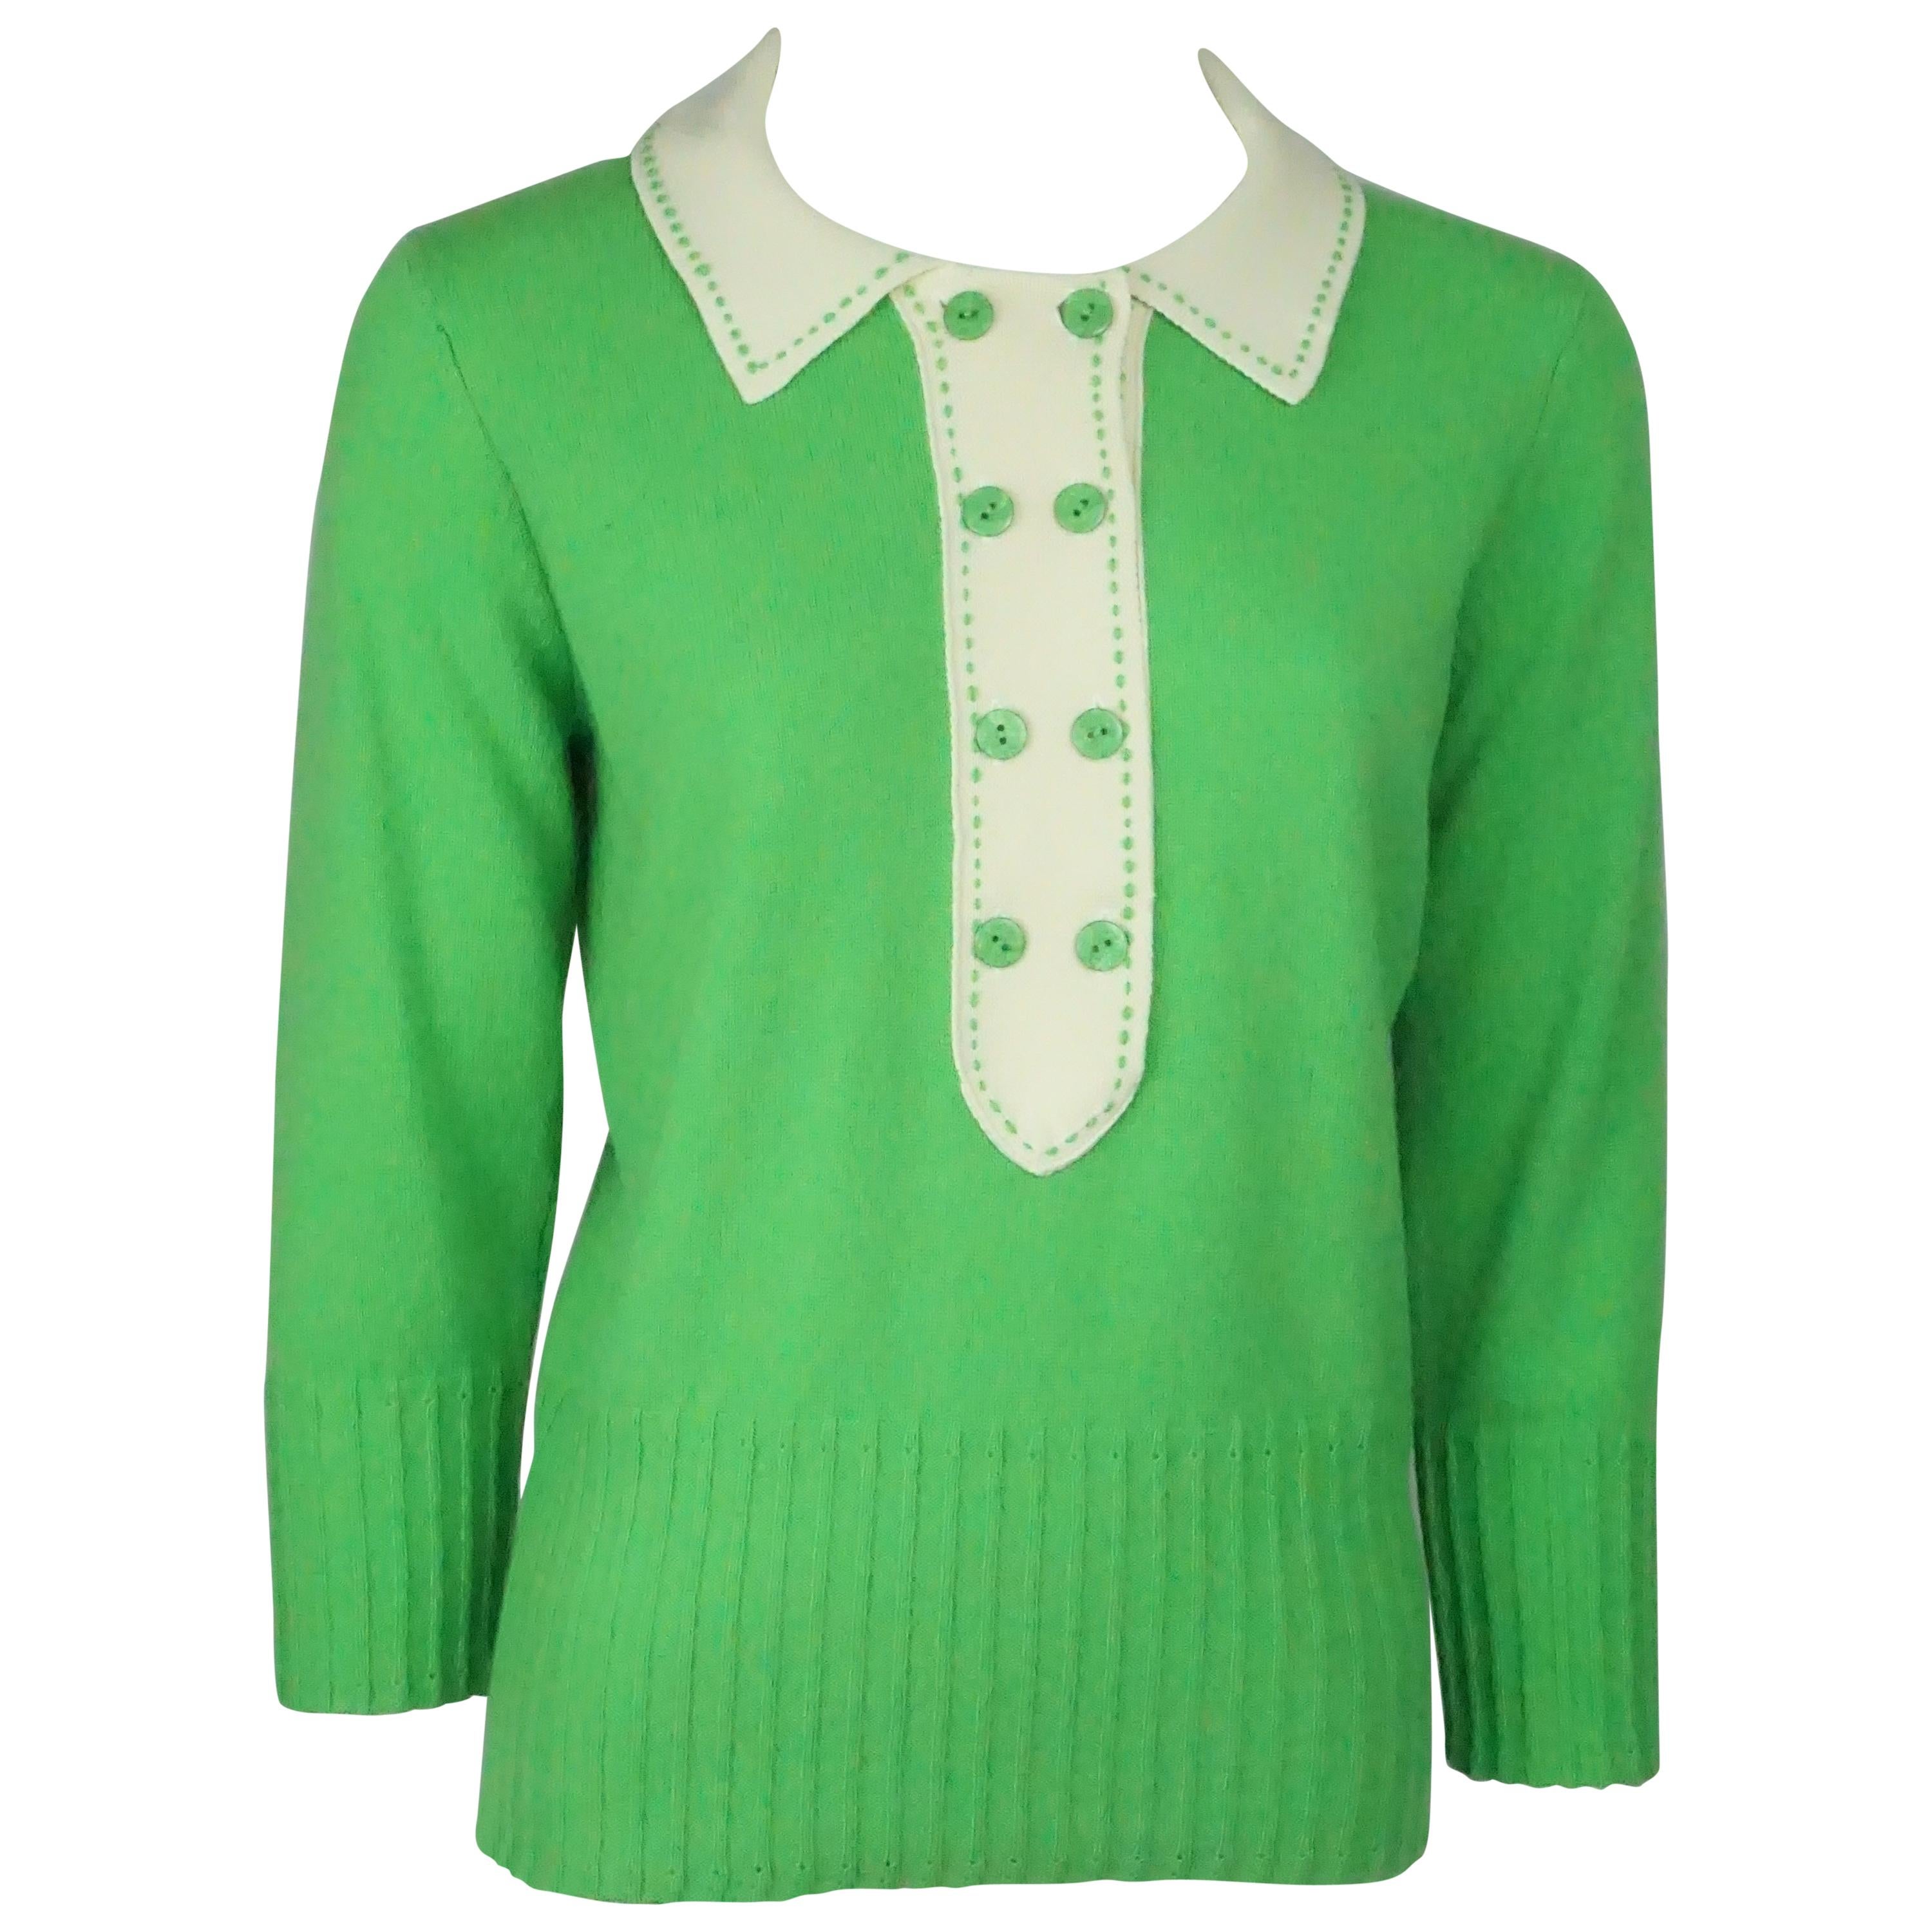 Milly Green & Ivory Sweater - Medium